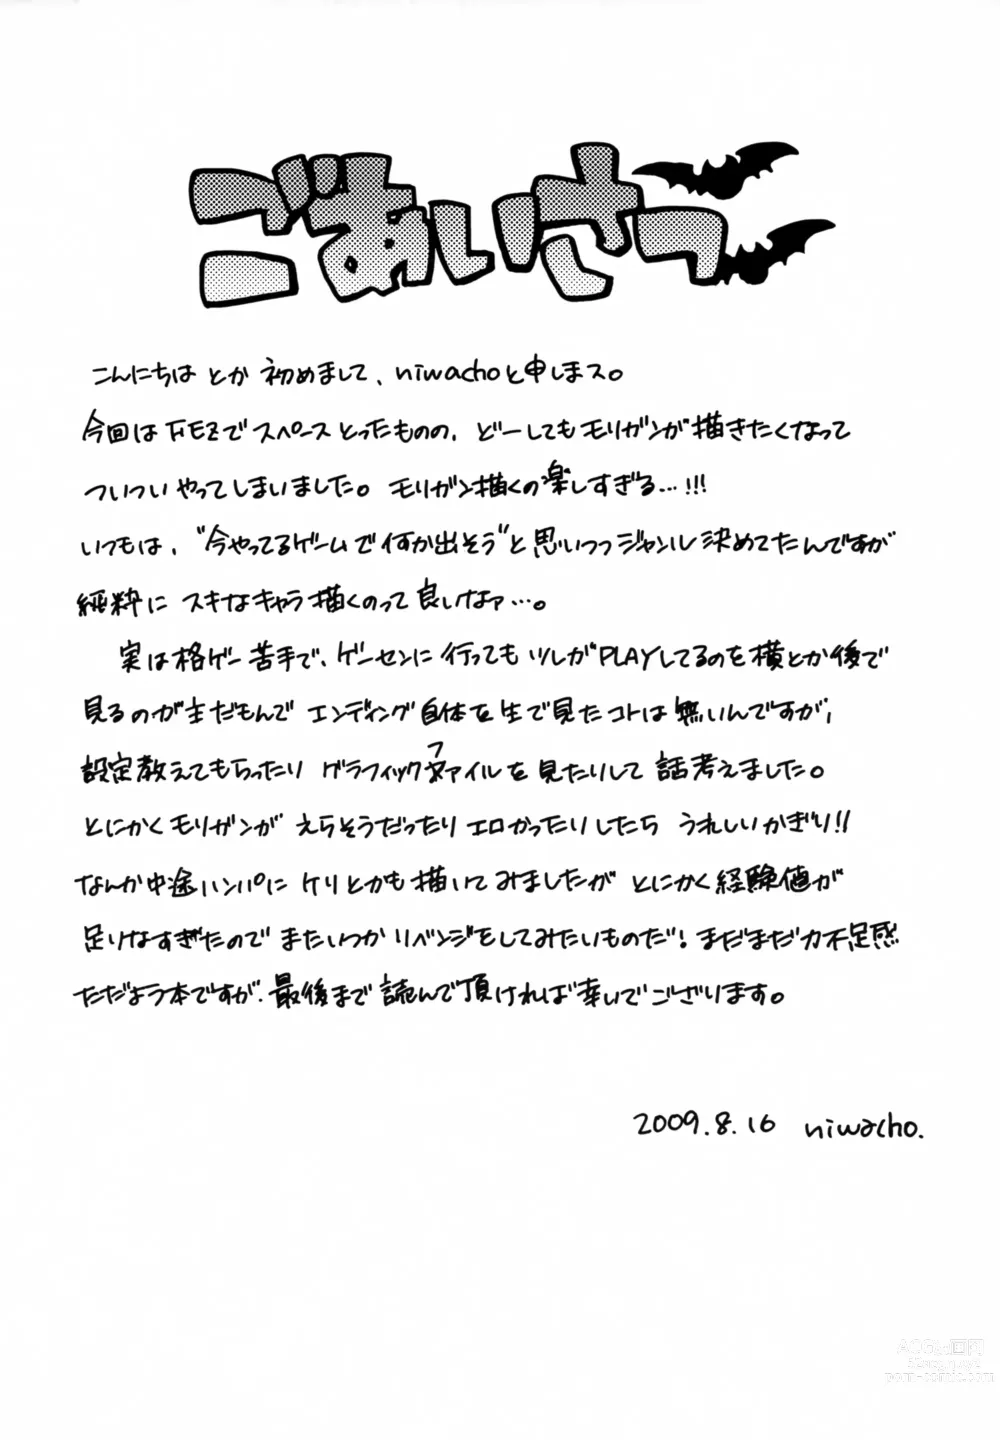 Page 3 of doujinshi regains